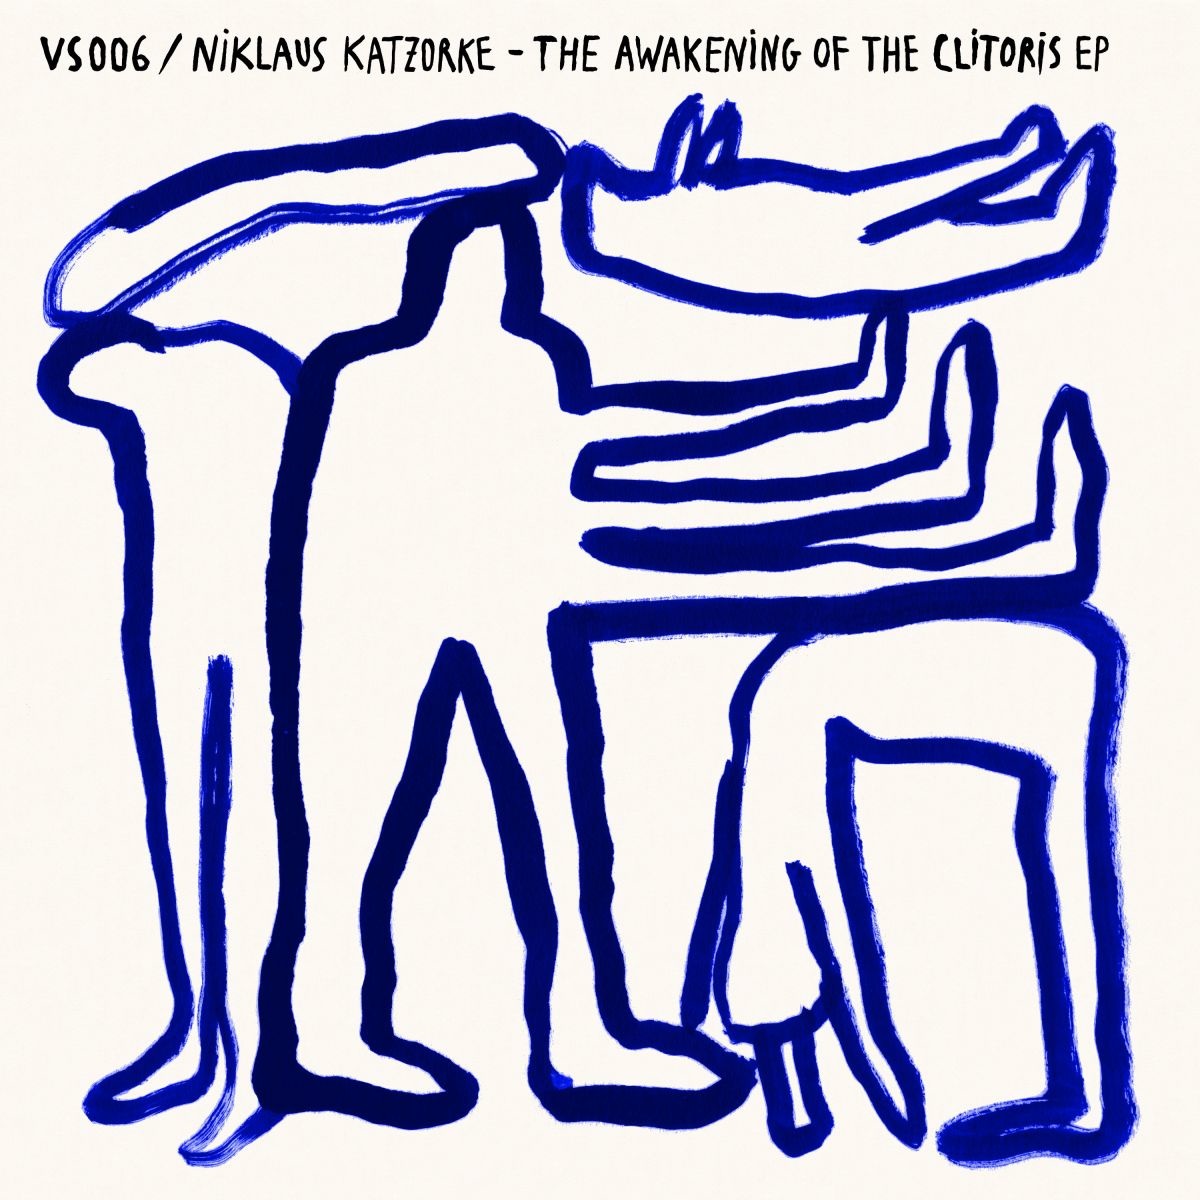 Niklaus Katzorke - The Awakening of the Clitoris EP / Voll Schoen